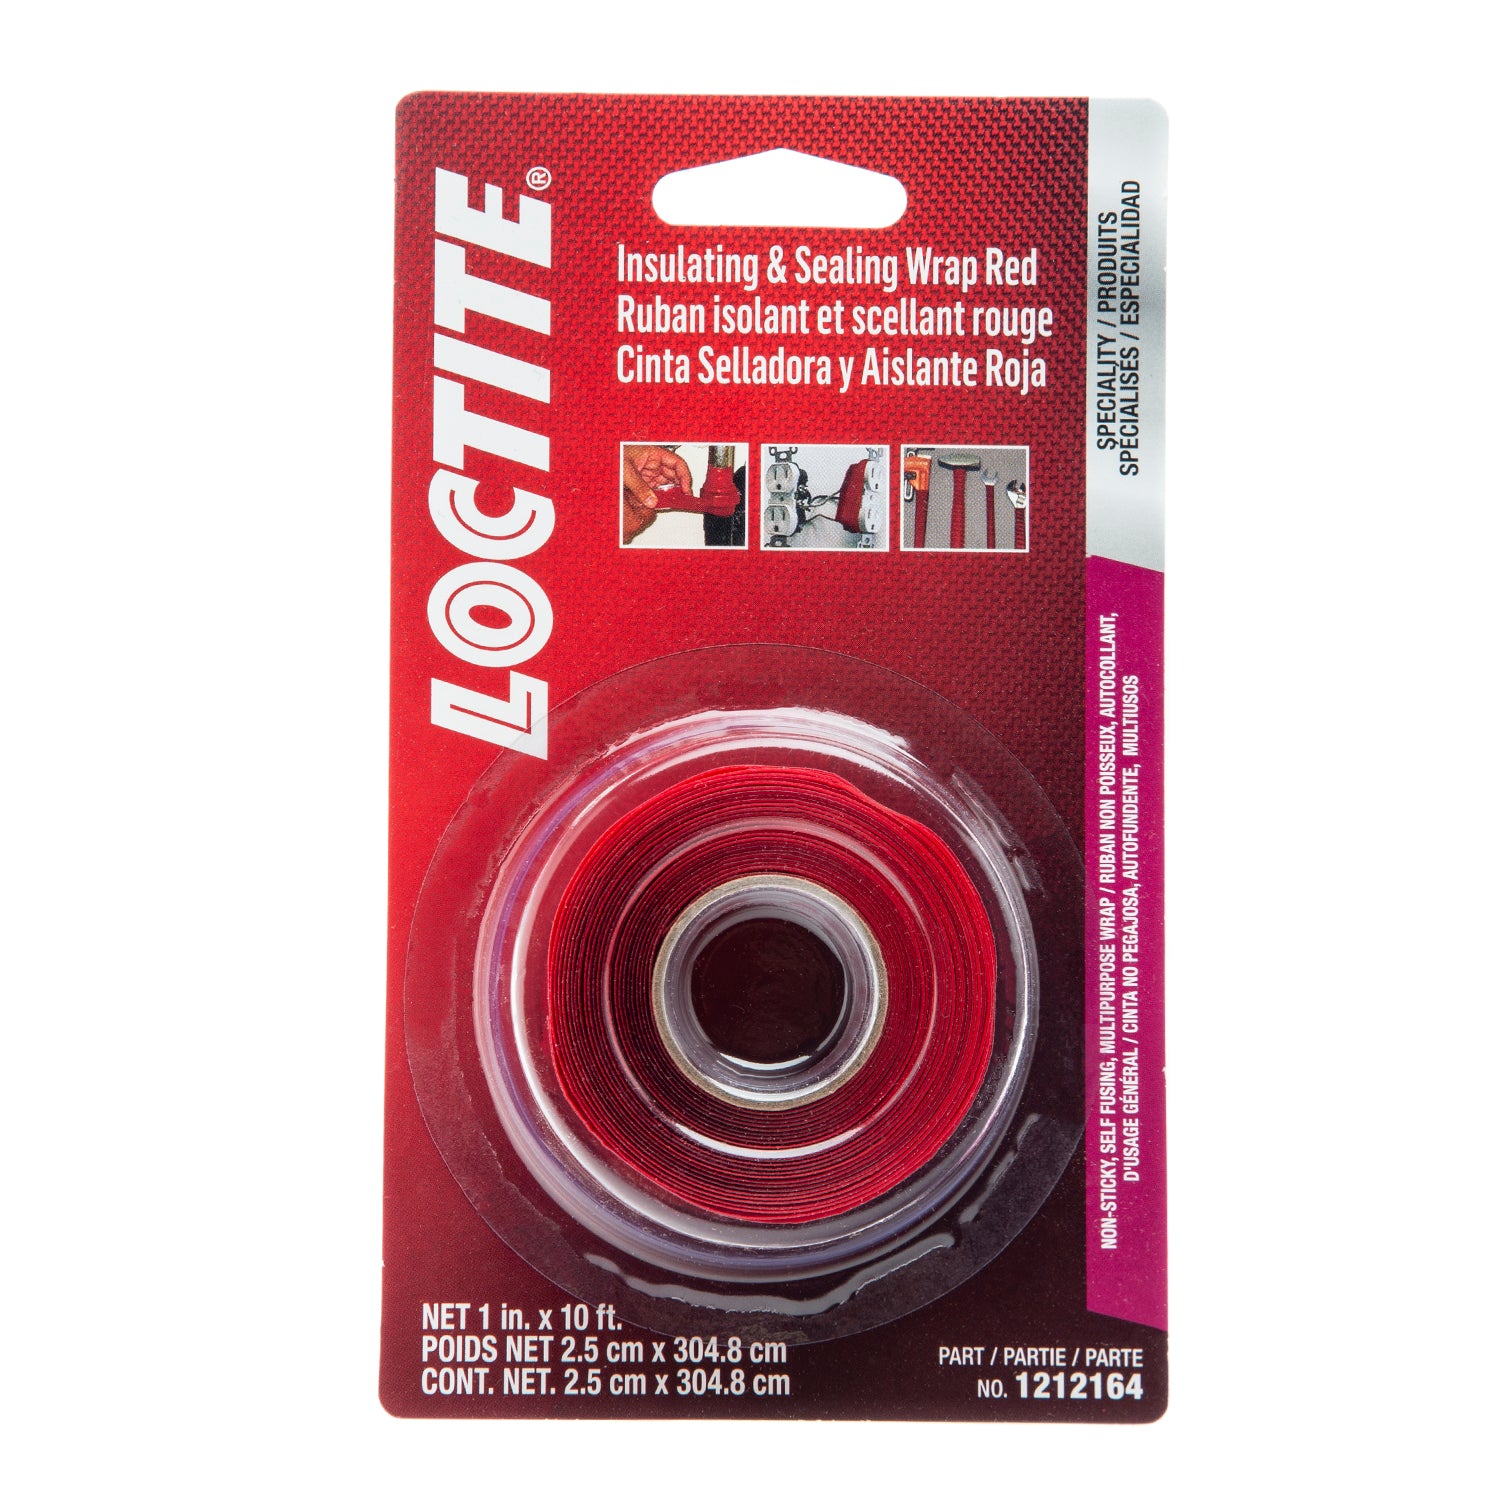 Loctite Insulating & Sealing Wrap - Red data-zoom=